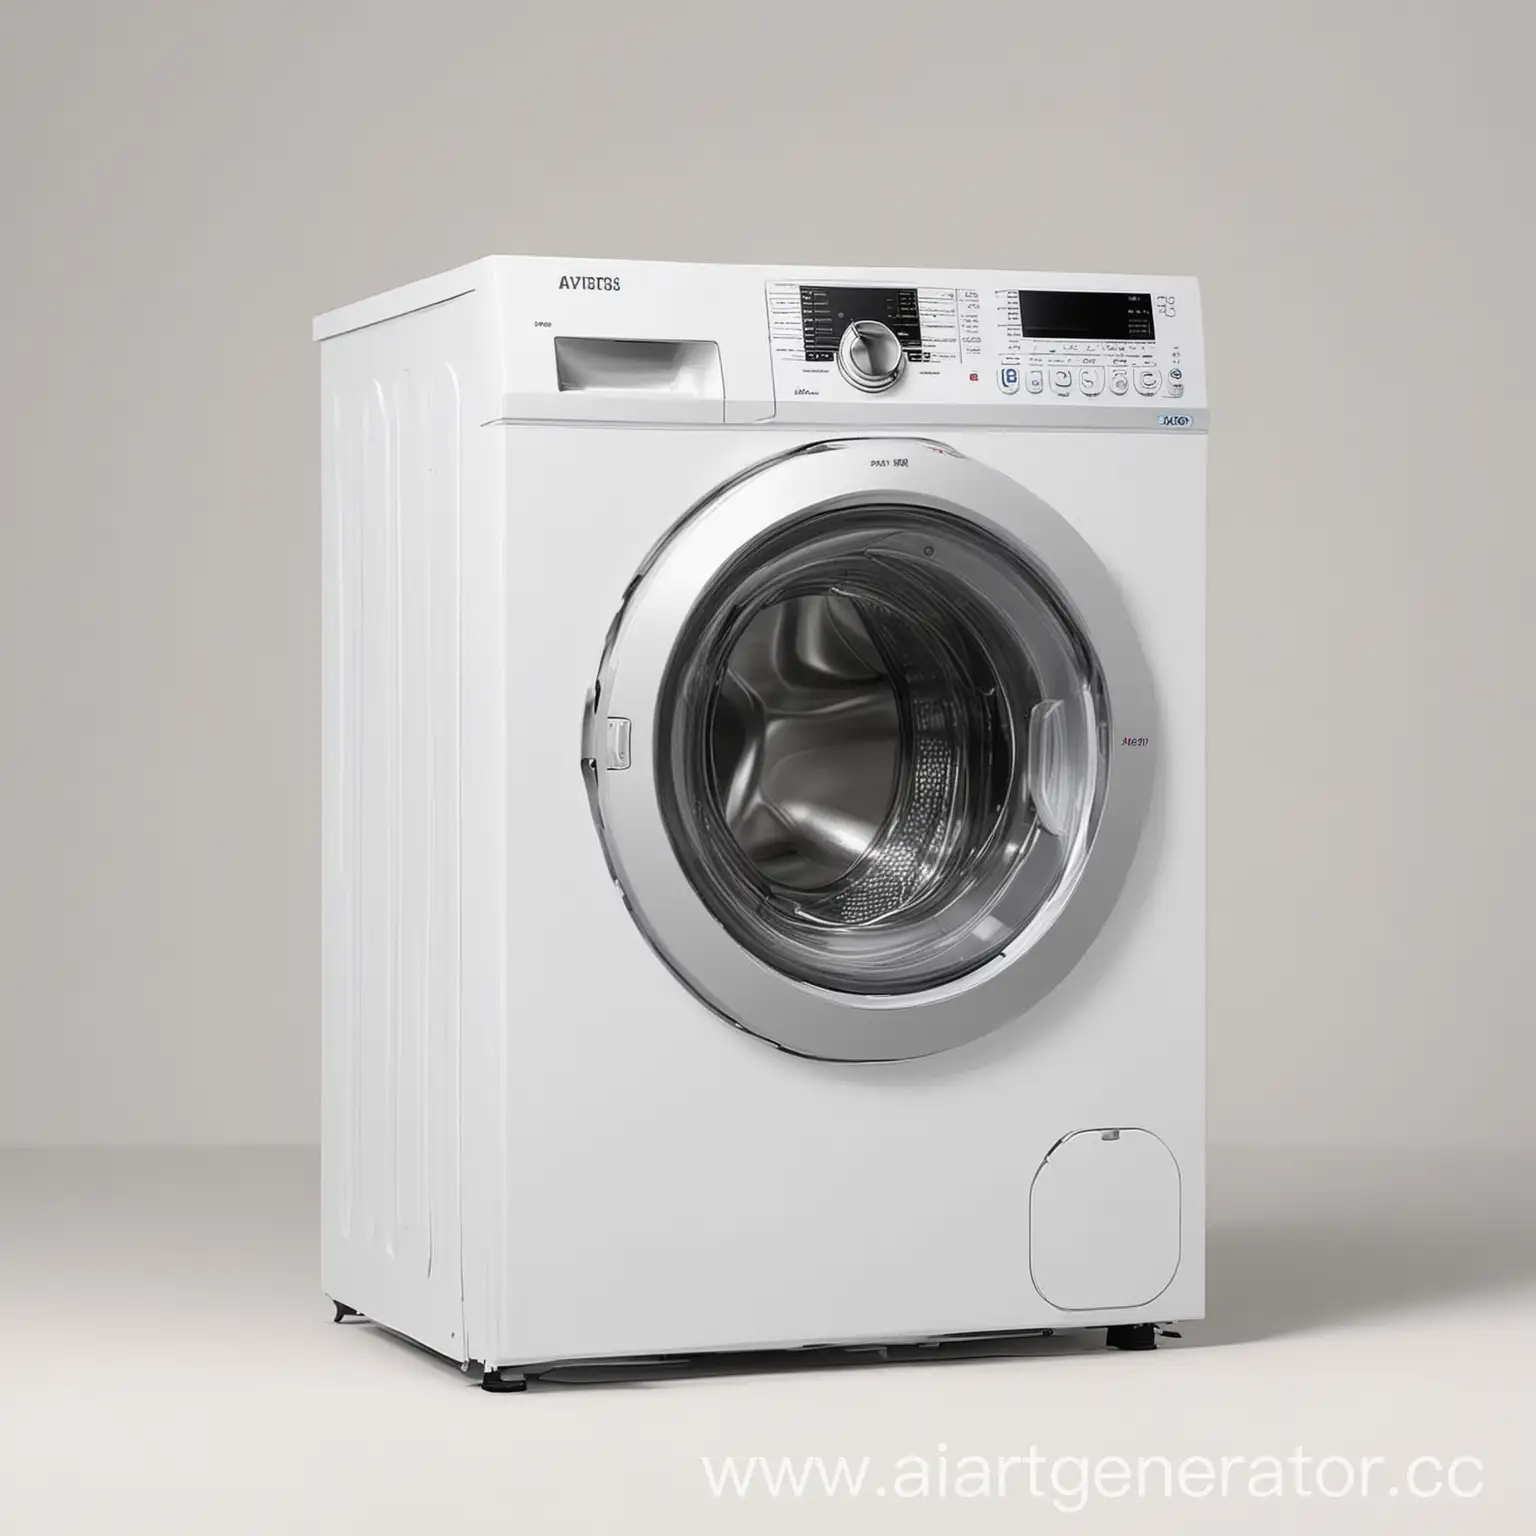 Buy-Washing-Machines-in-Bryansk-Avito-Ad-on-White-Background